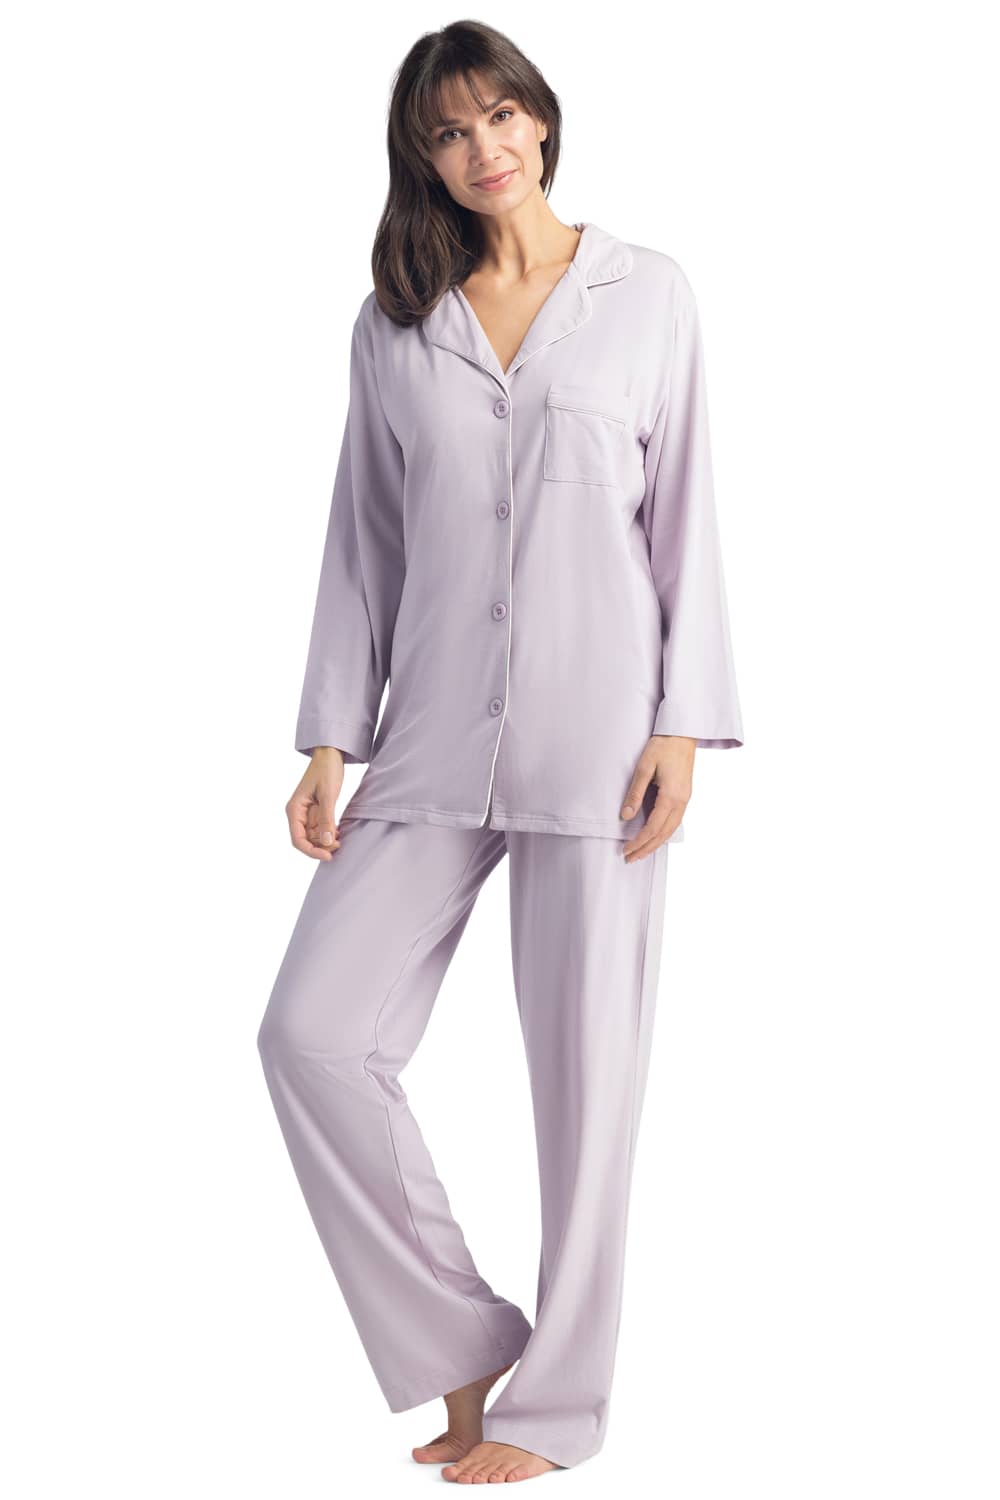 Fishers Finery Women's 100% Mulberry Silk Long Pajama Set with Gift Box